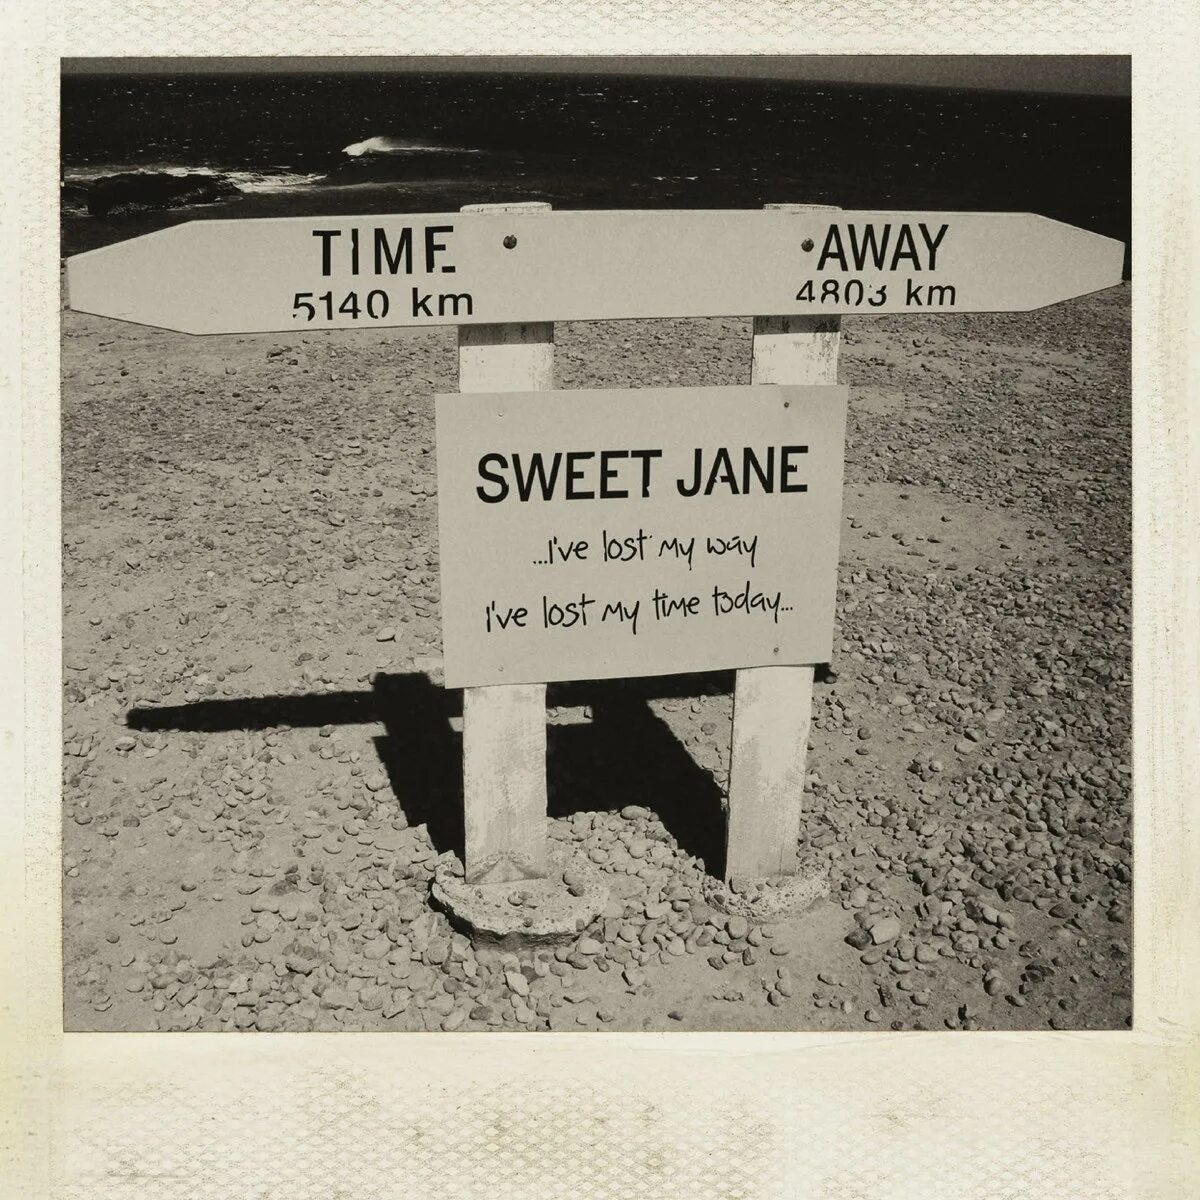 Sweet jane. Jane Sweet. Sweet Jane Checz.